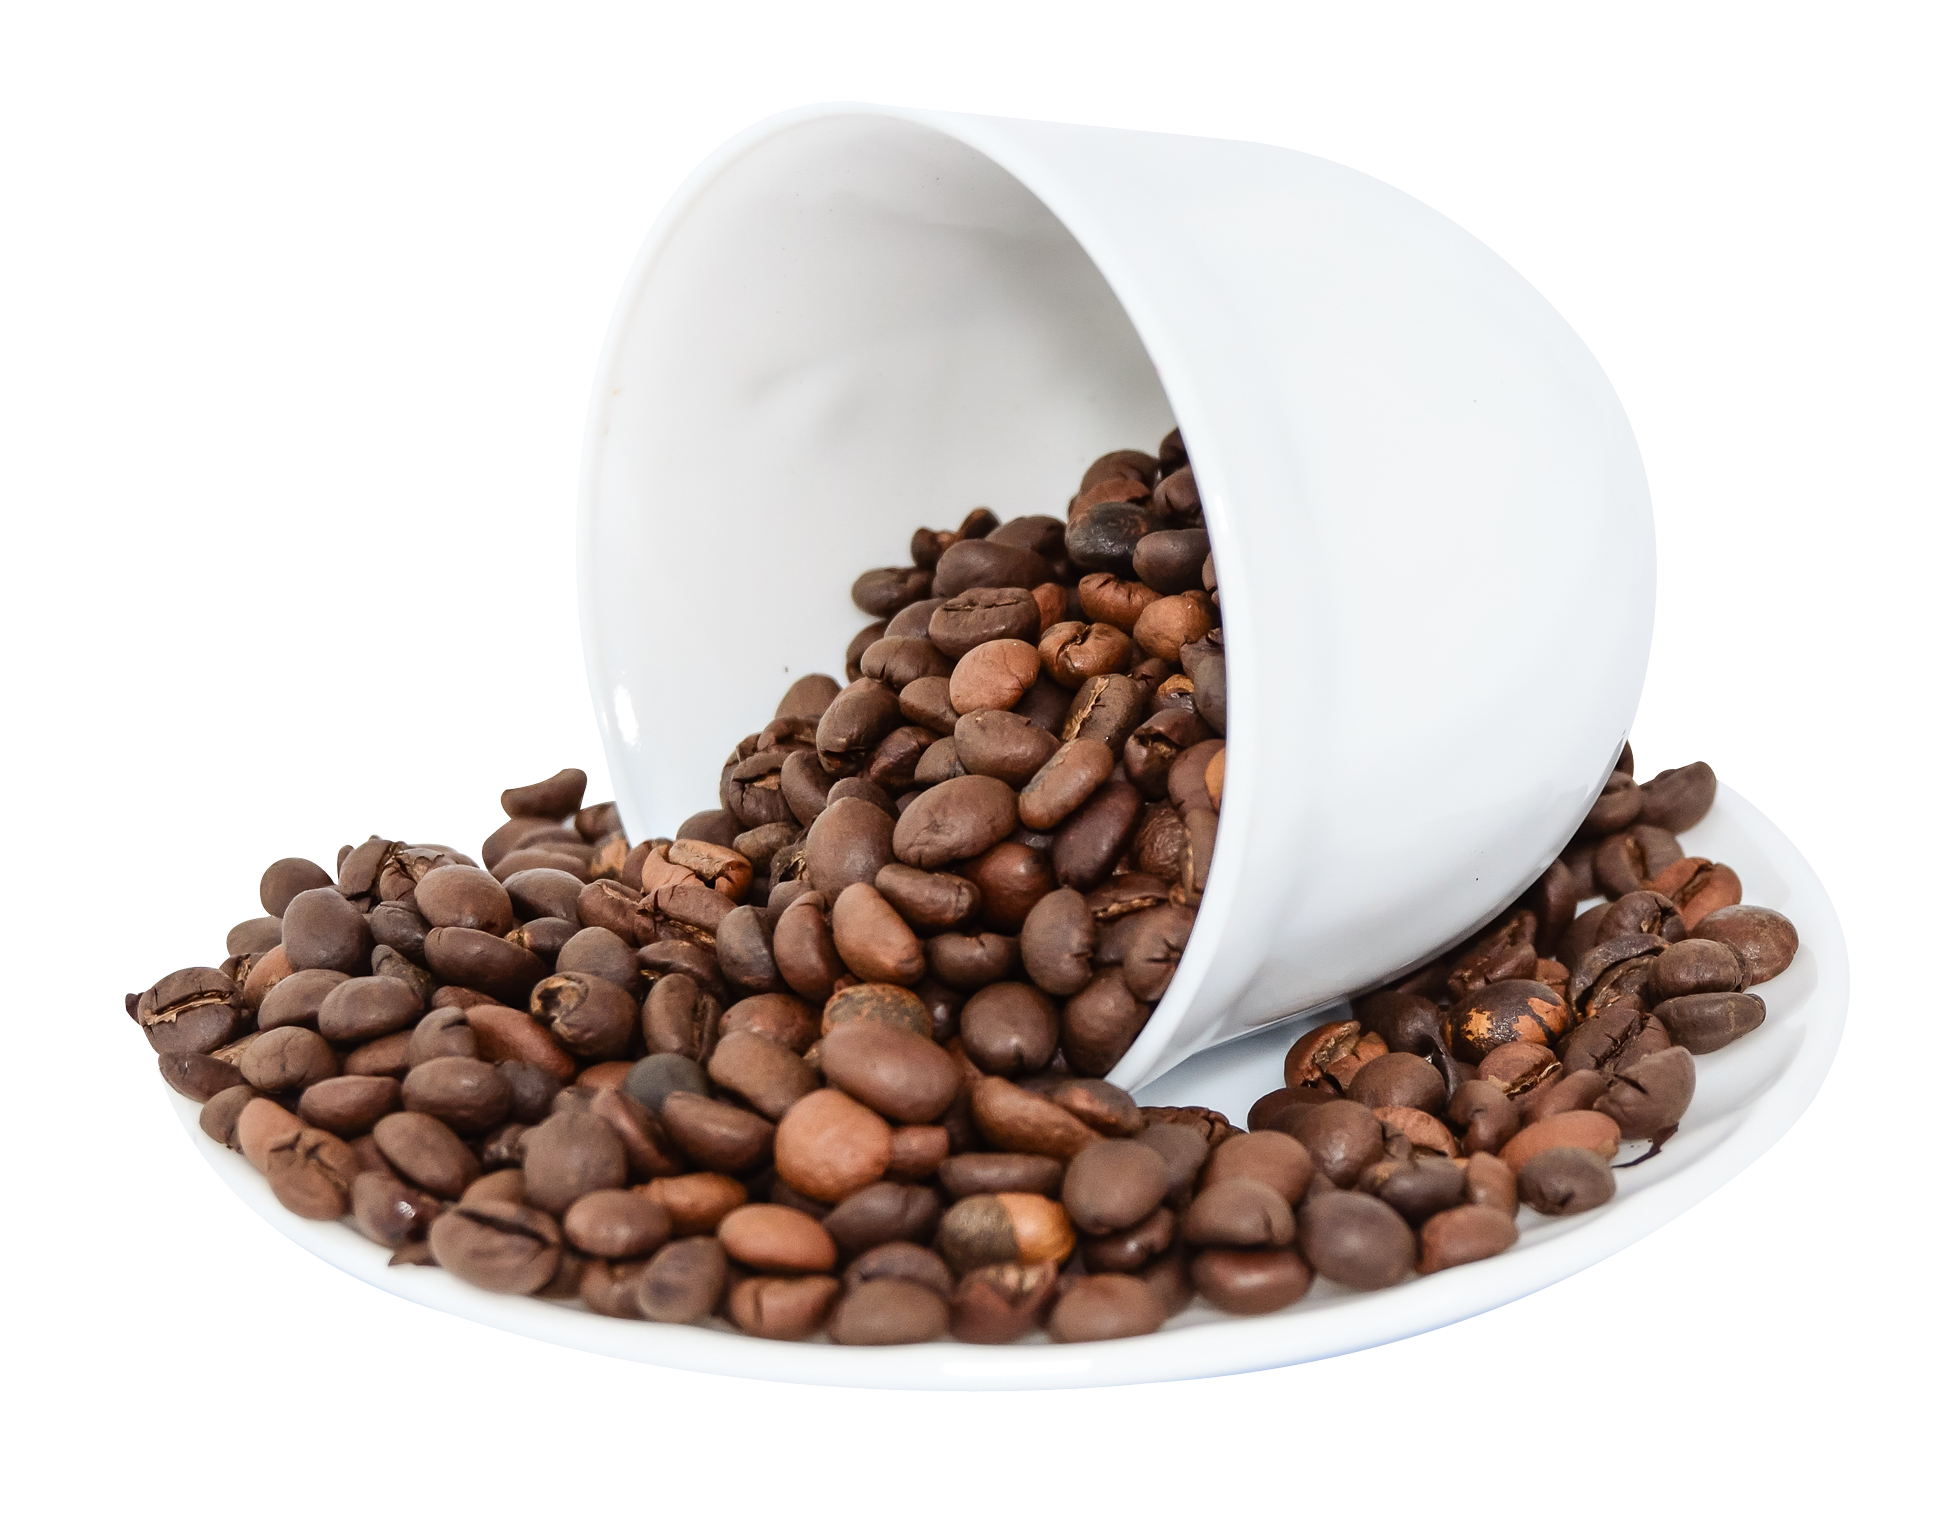 Coffee Bean PNG